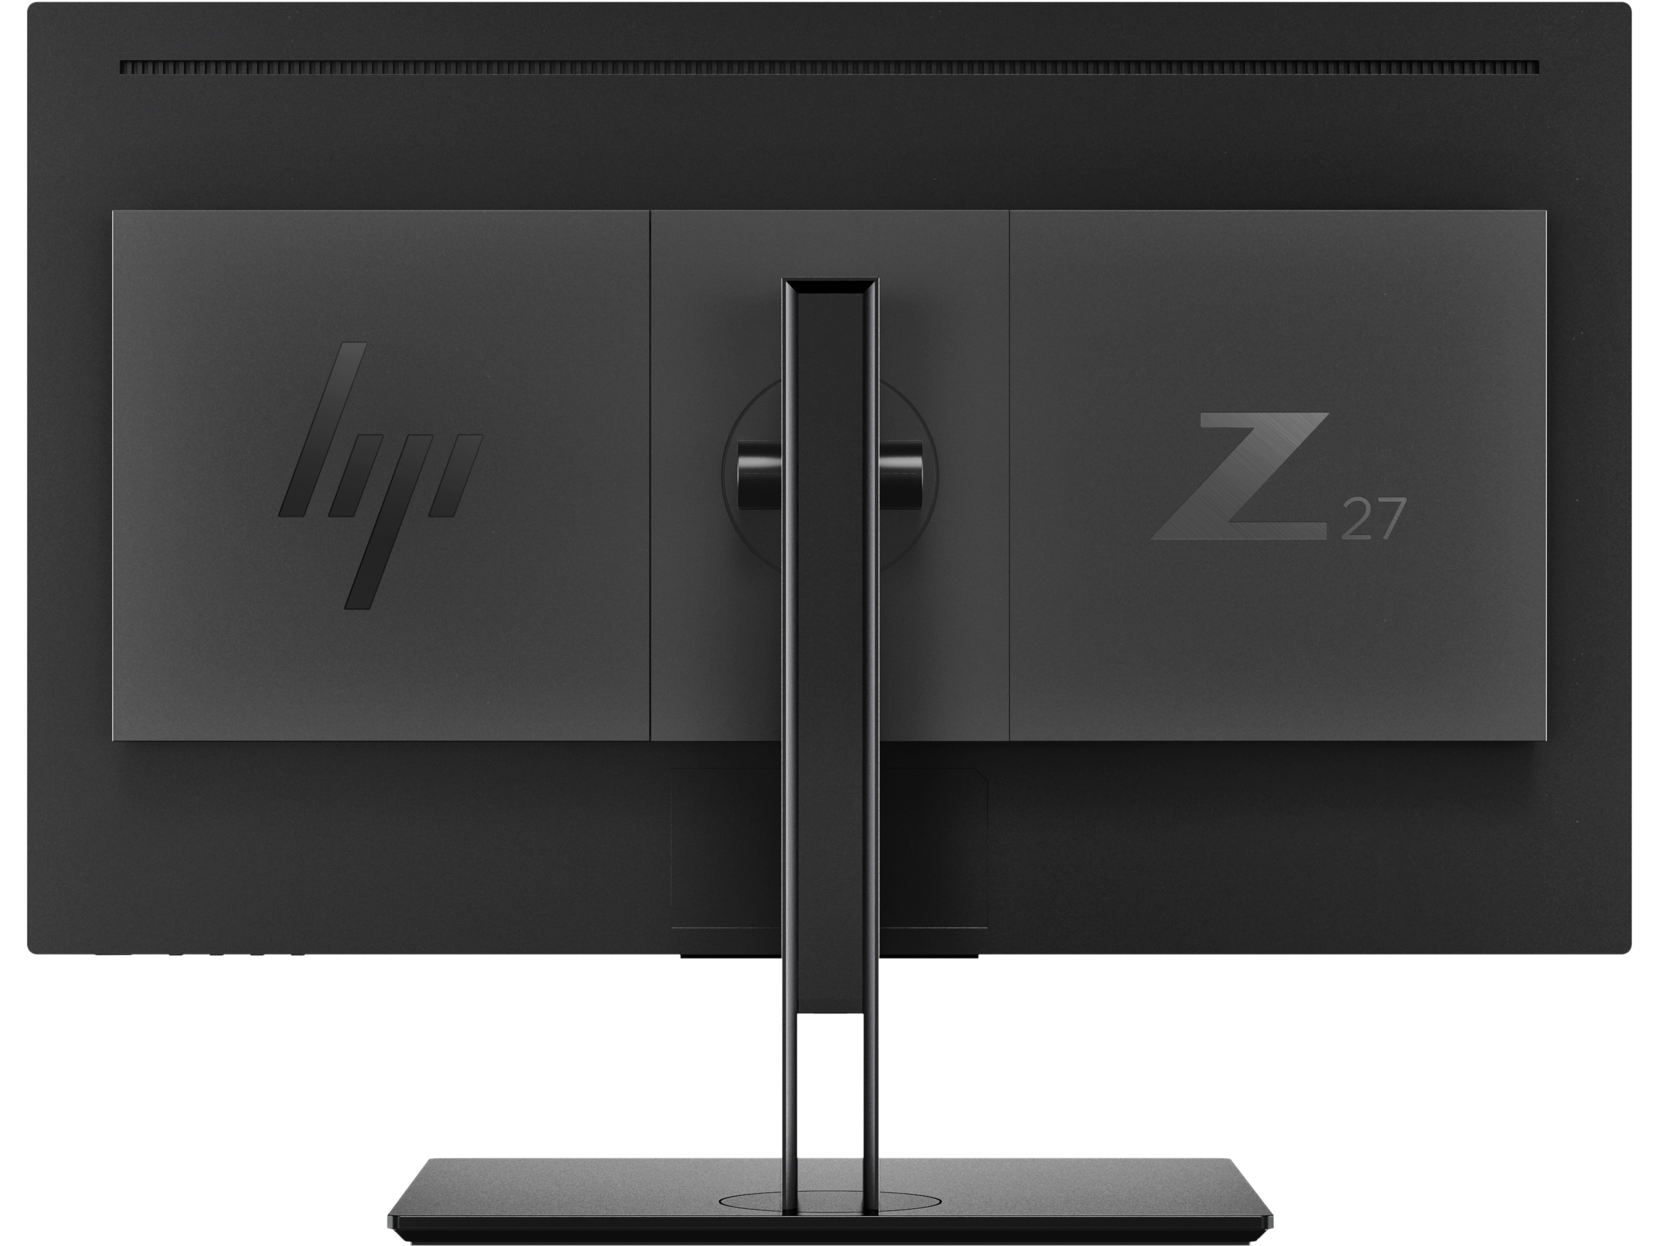 Монитор HP Z27 4K UHD Monitor 3840х2160, 16:9, IPS, 350 cd/m2, 1300:1, 178°/178°, HDMI, USB 3.0, DisplayPort, Energy Star, Epeat, Black-26915